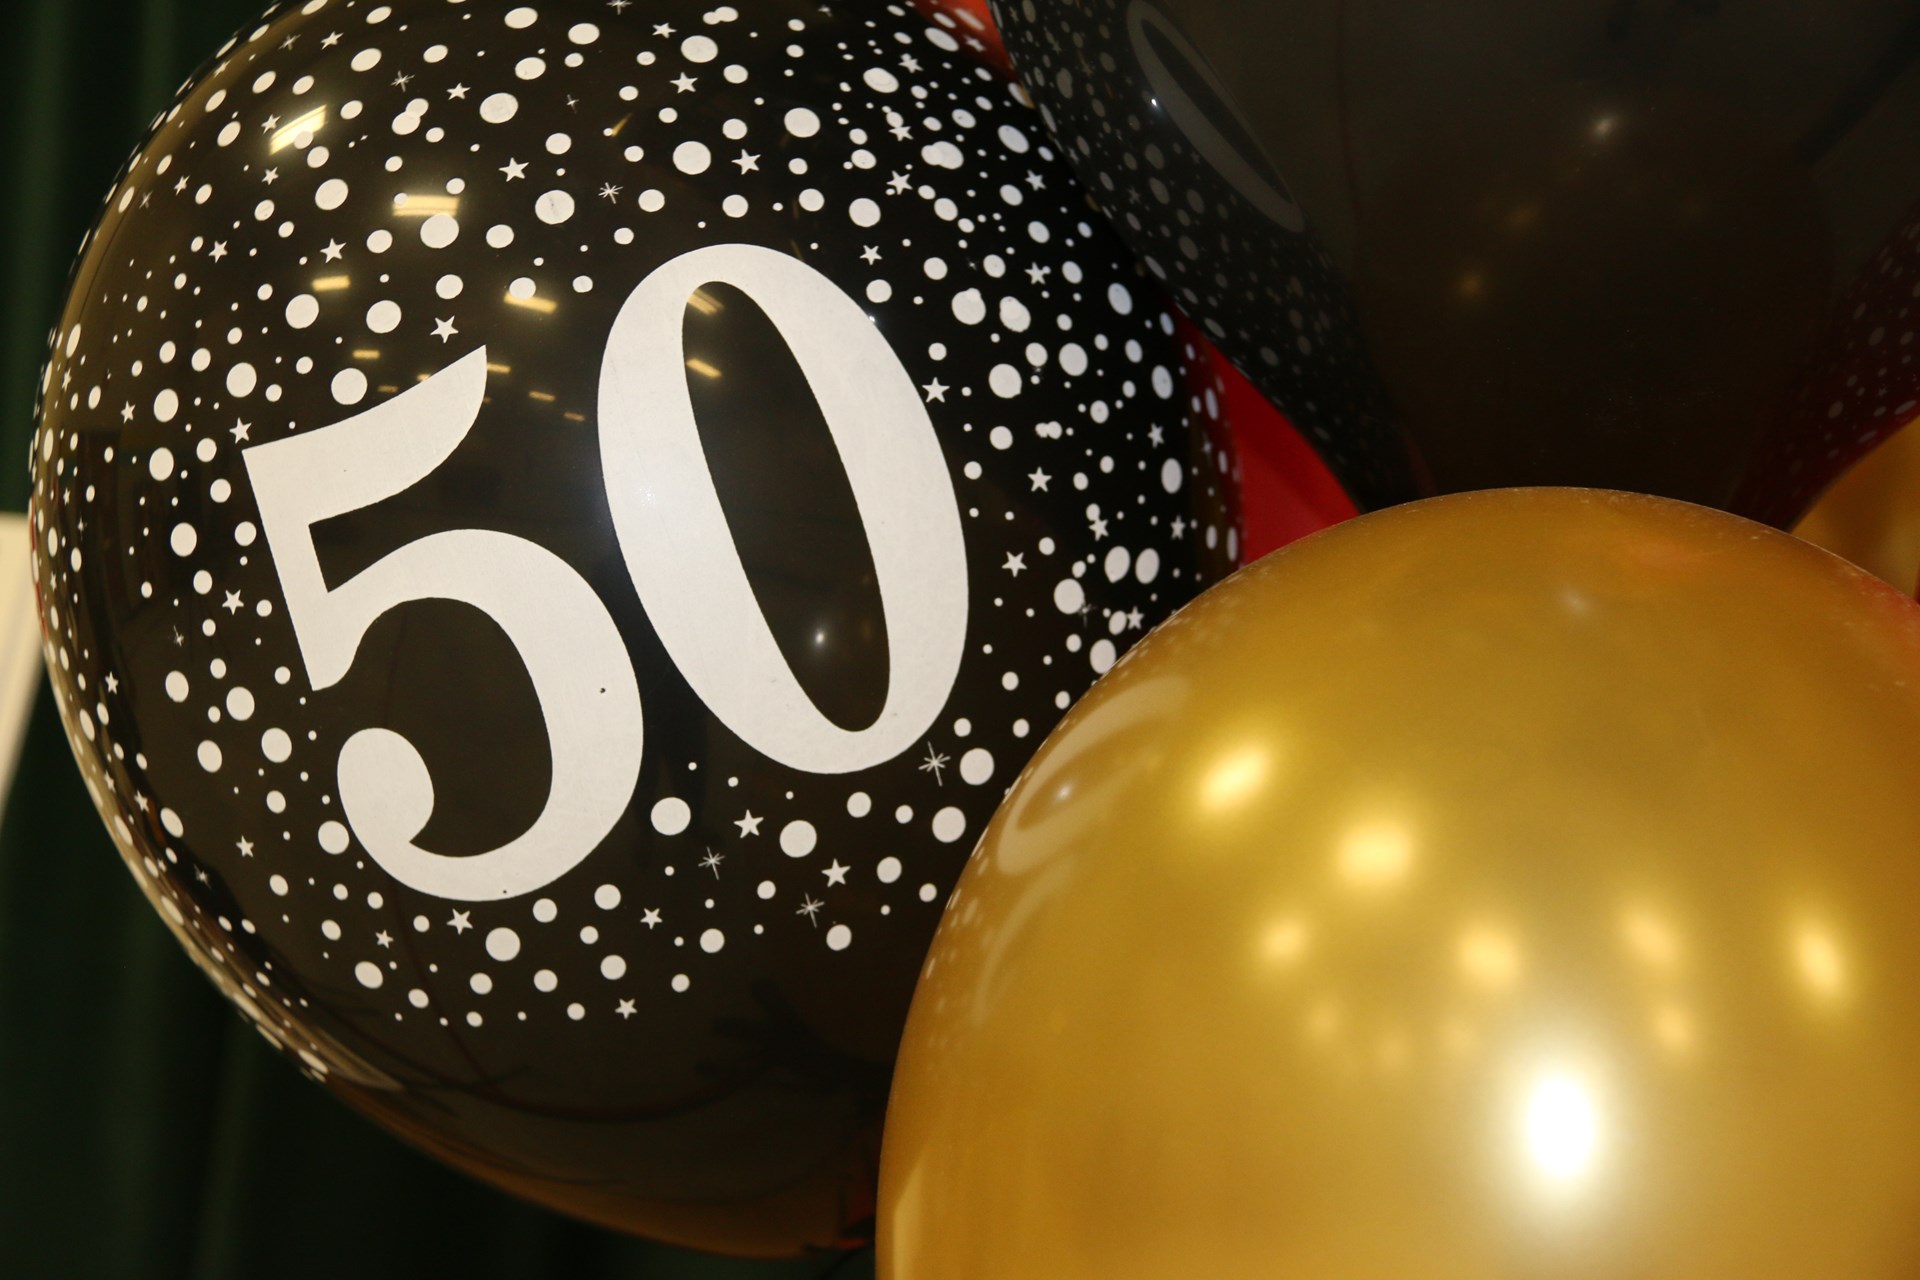 50 years balloons